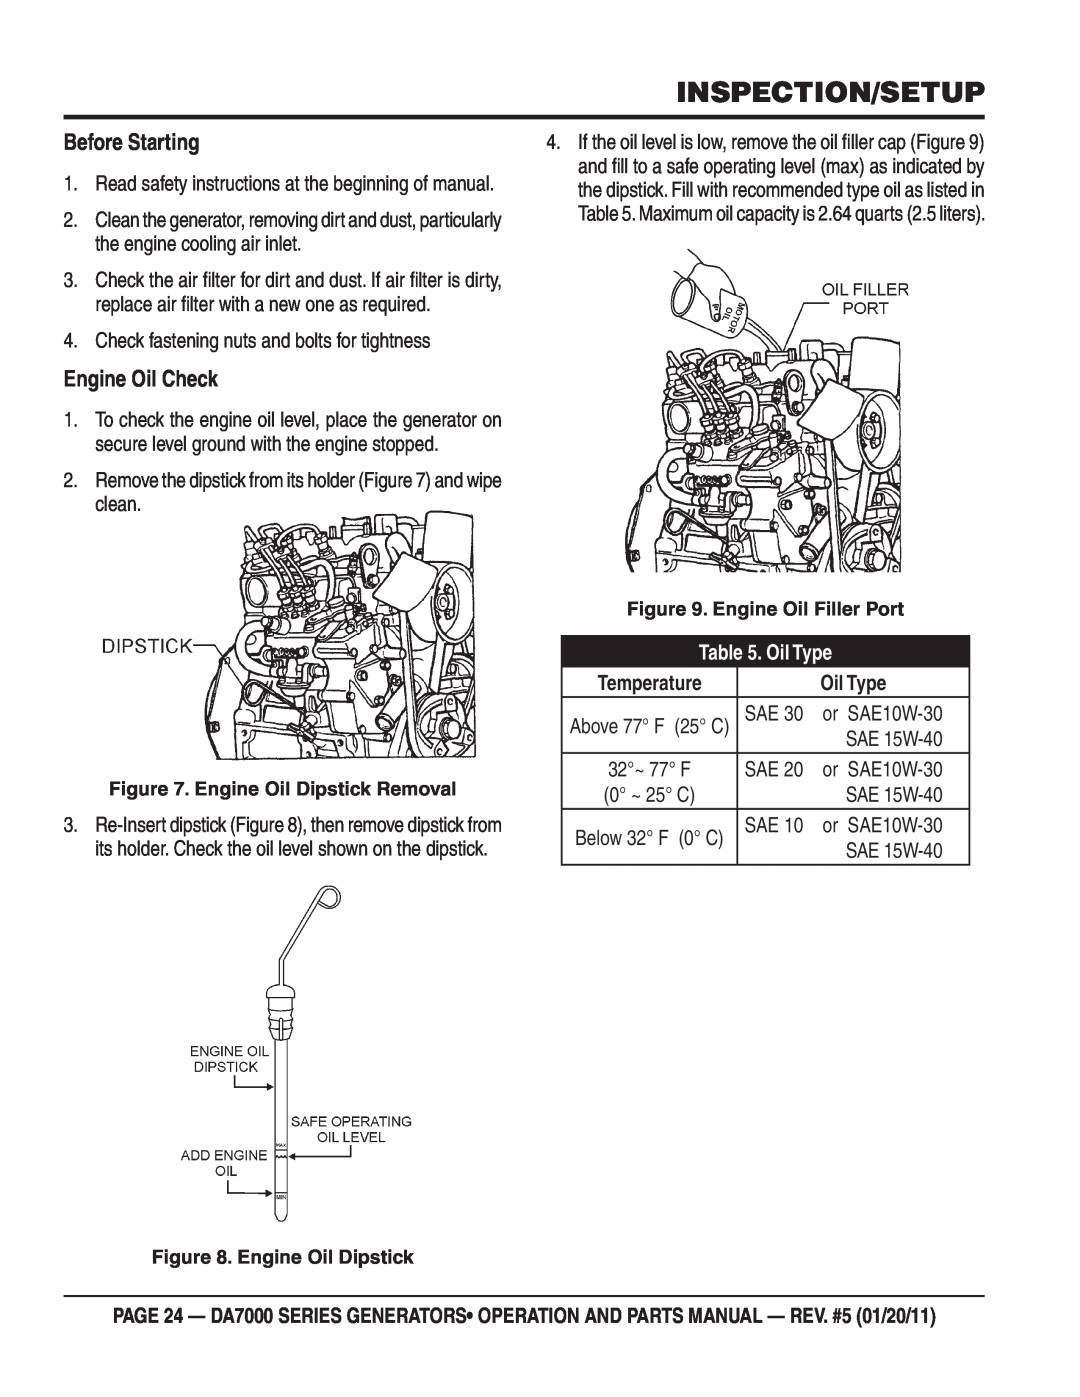 Multiquip DA7000WGH manual Before Starting, Engine Oil Check, Oil Type, Temperature, Inspection/Setup, Engine Oil Dipstick 